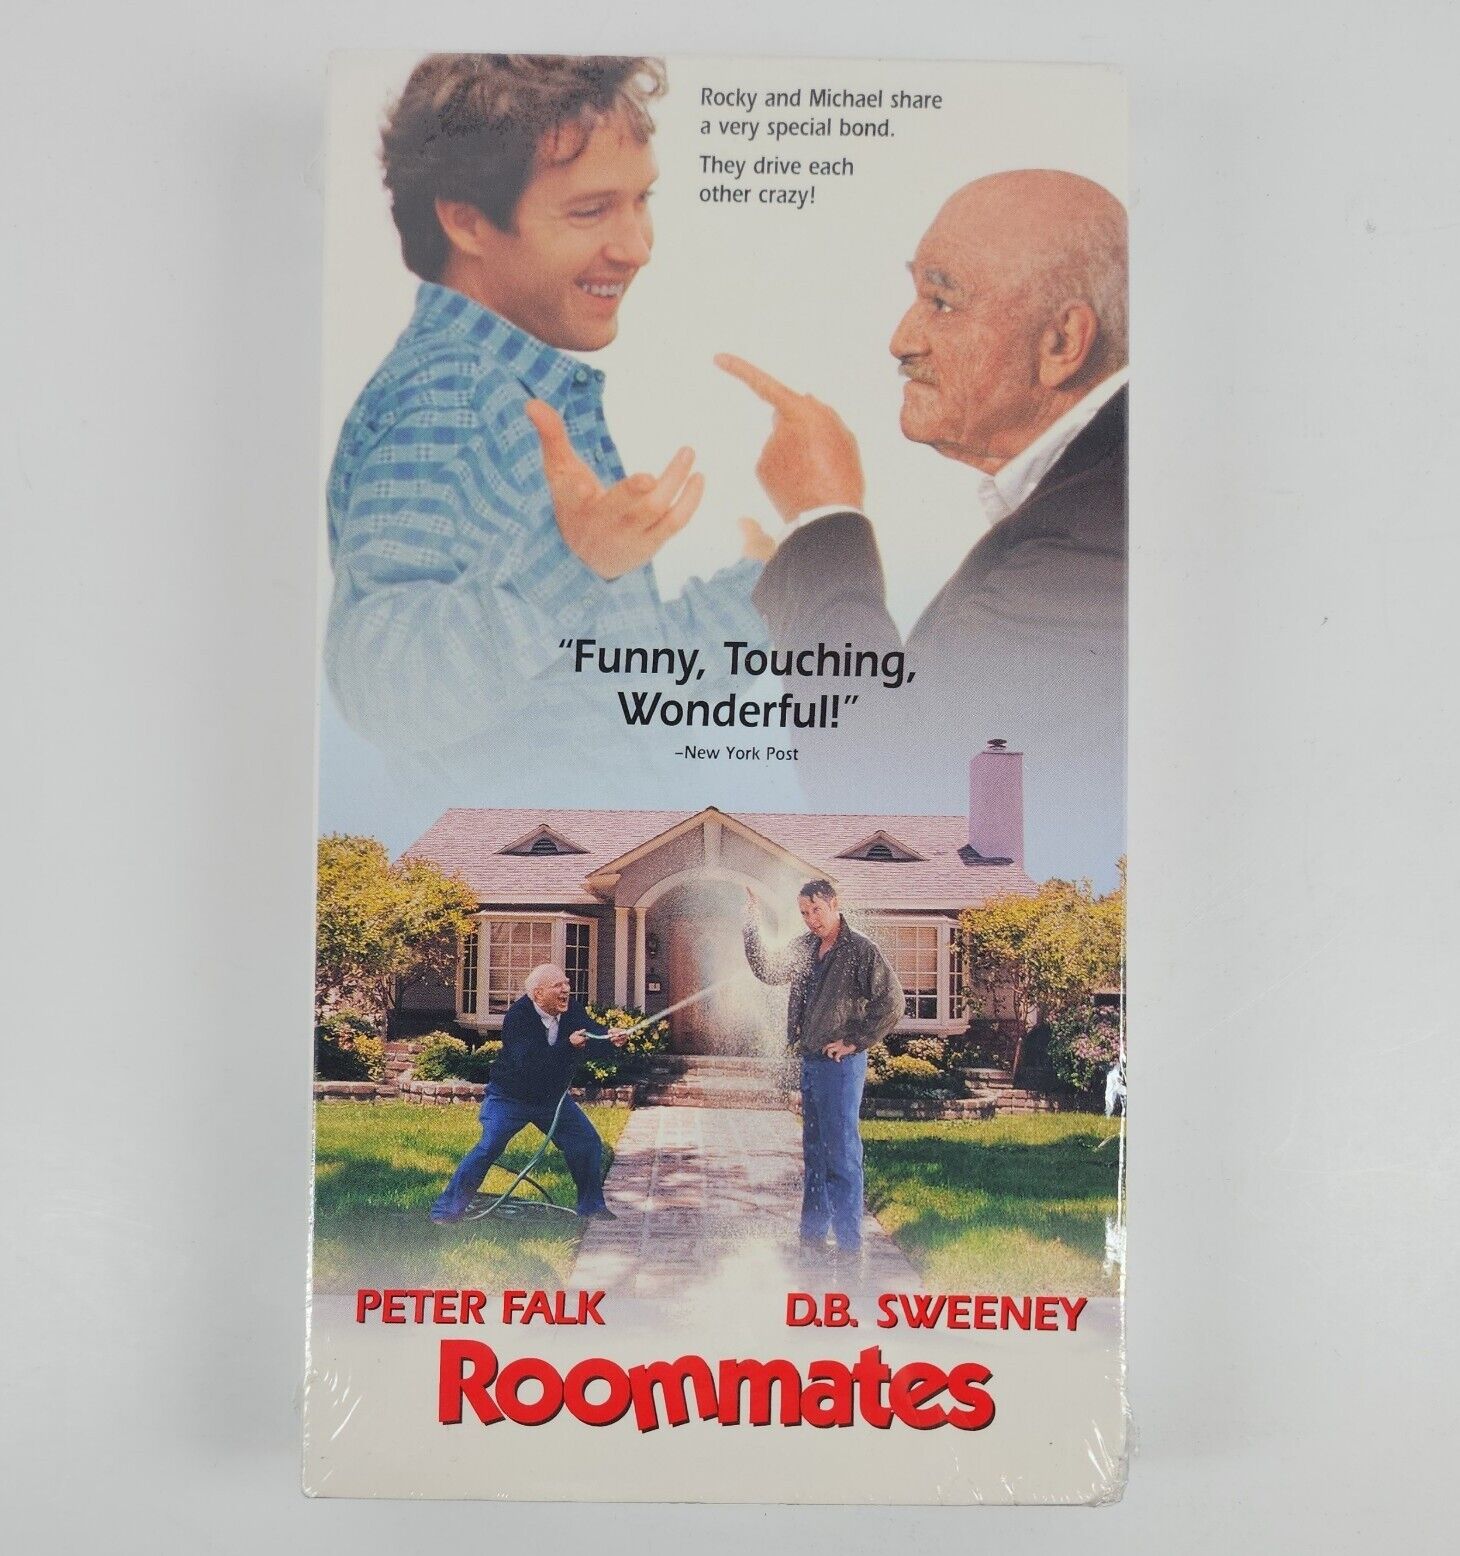 andrew laudicina recommends roommates 1995 full movie pic